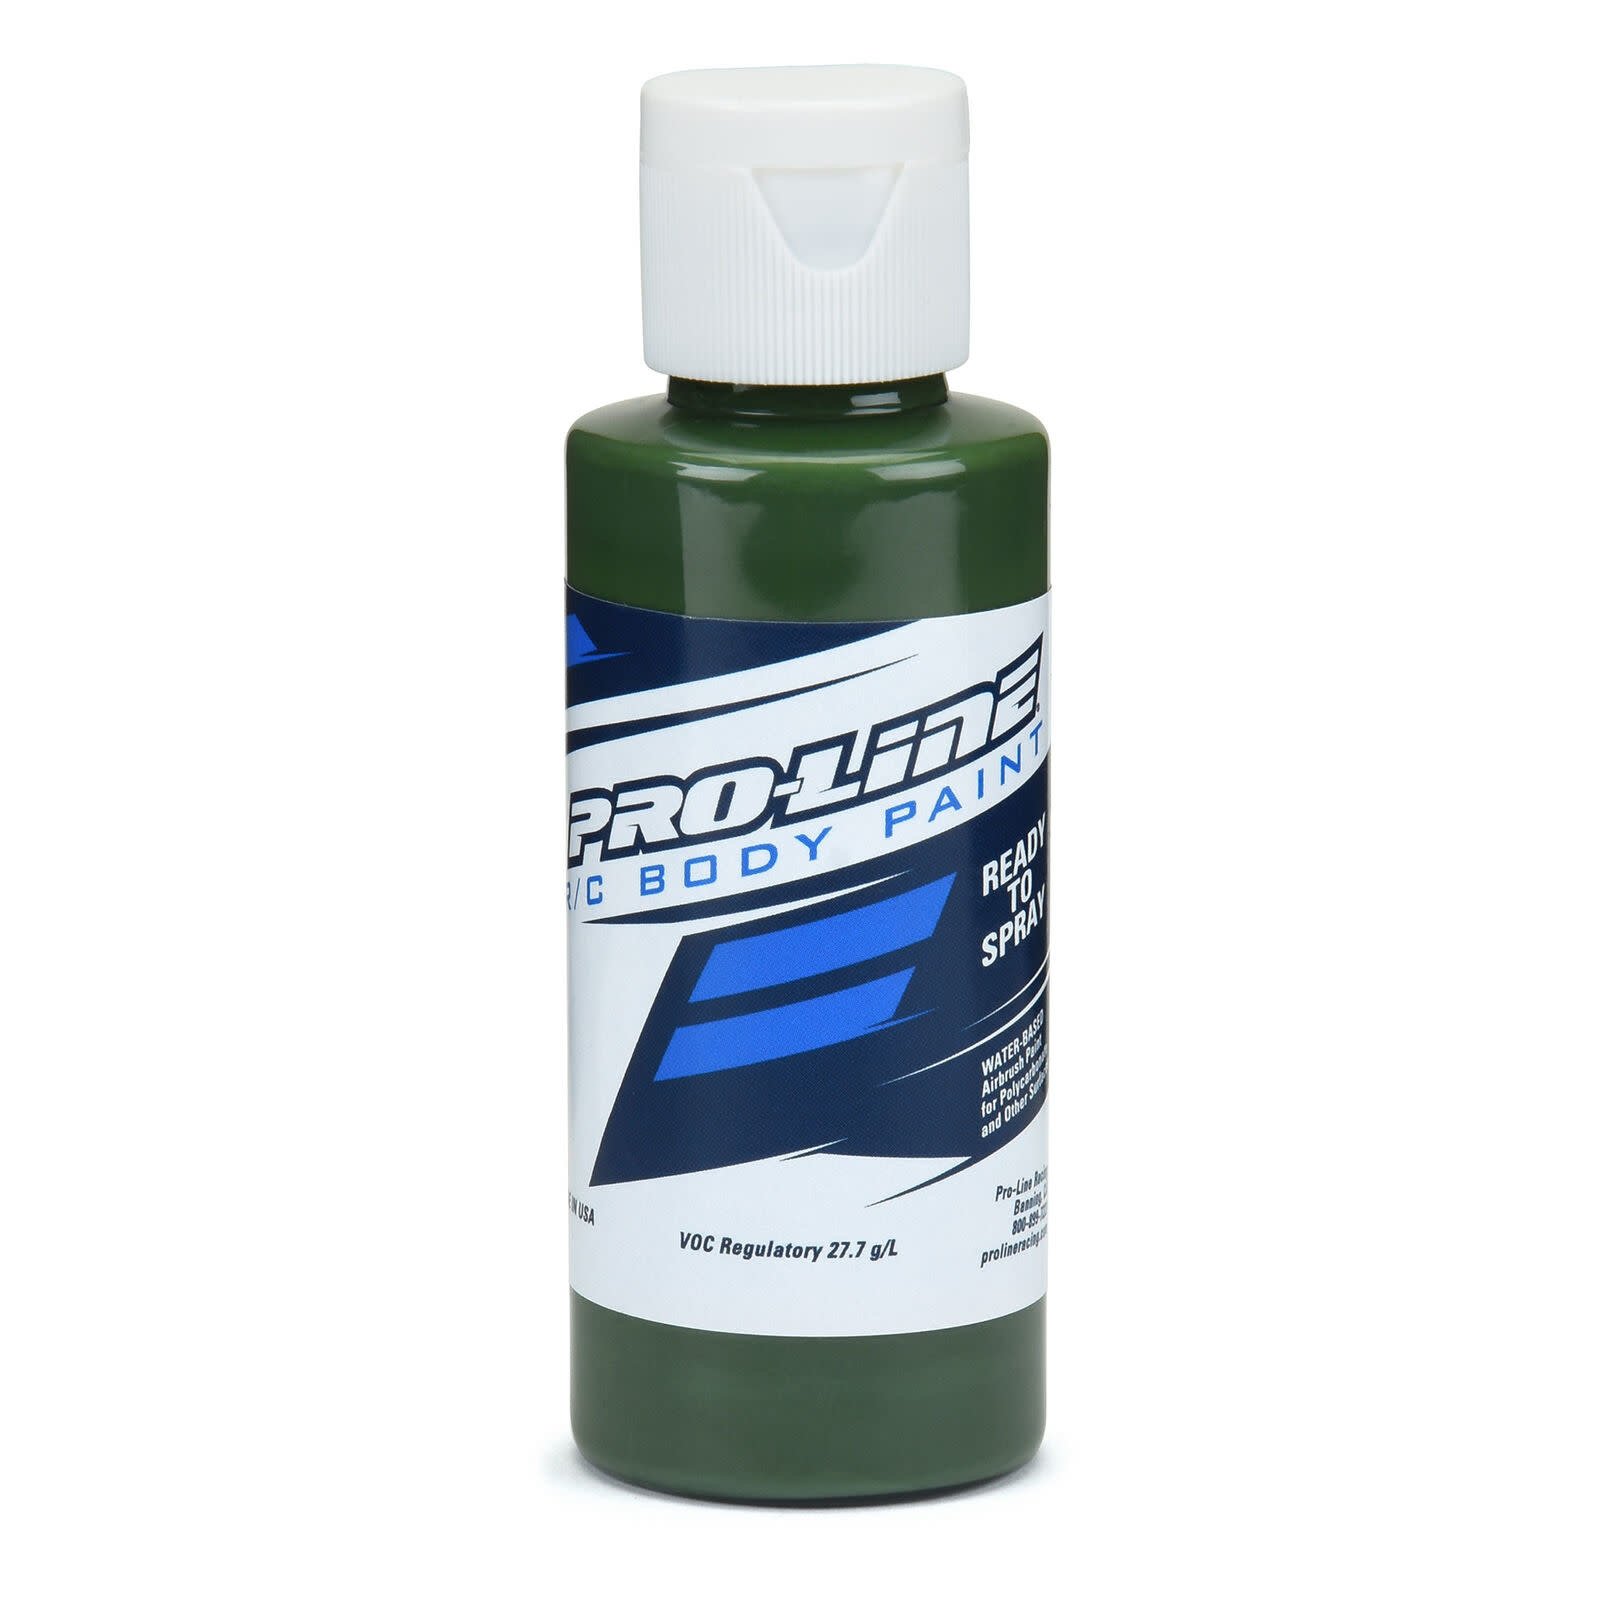 PRO PRO632508 Proline Racing RC Body Paint - Mil Spec Green